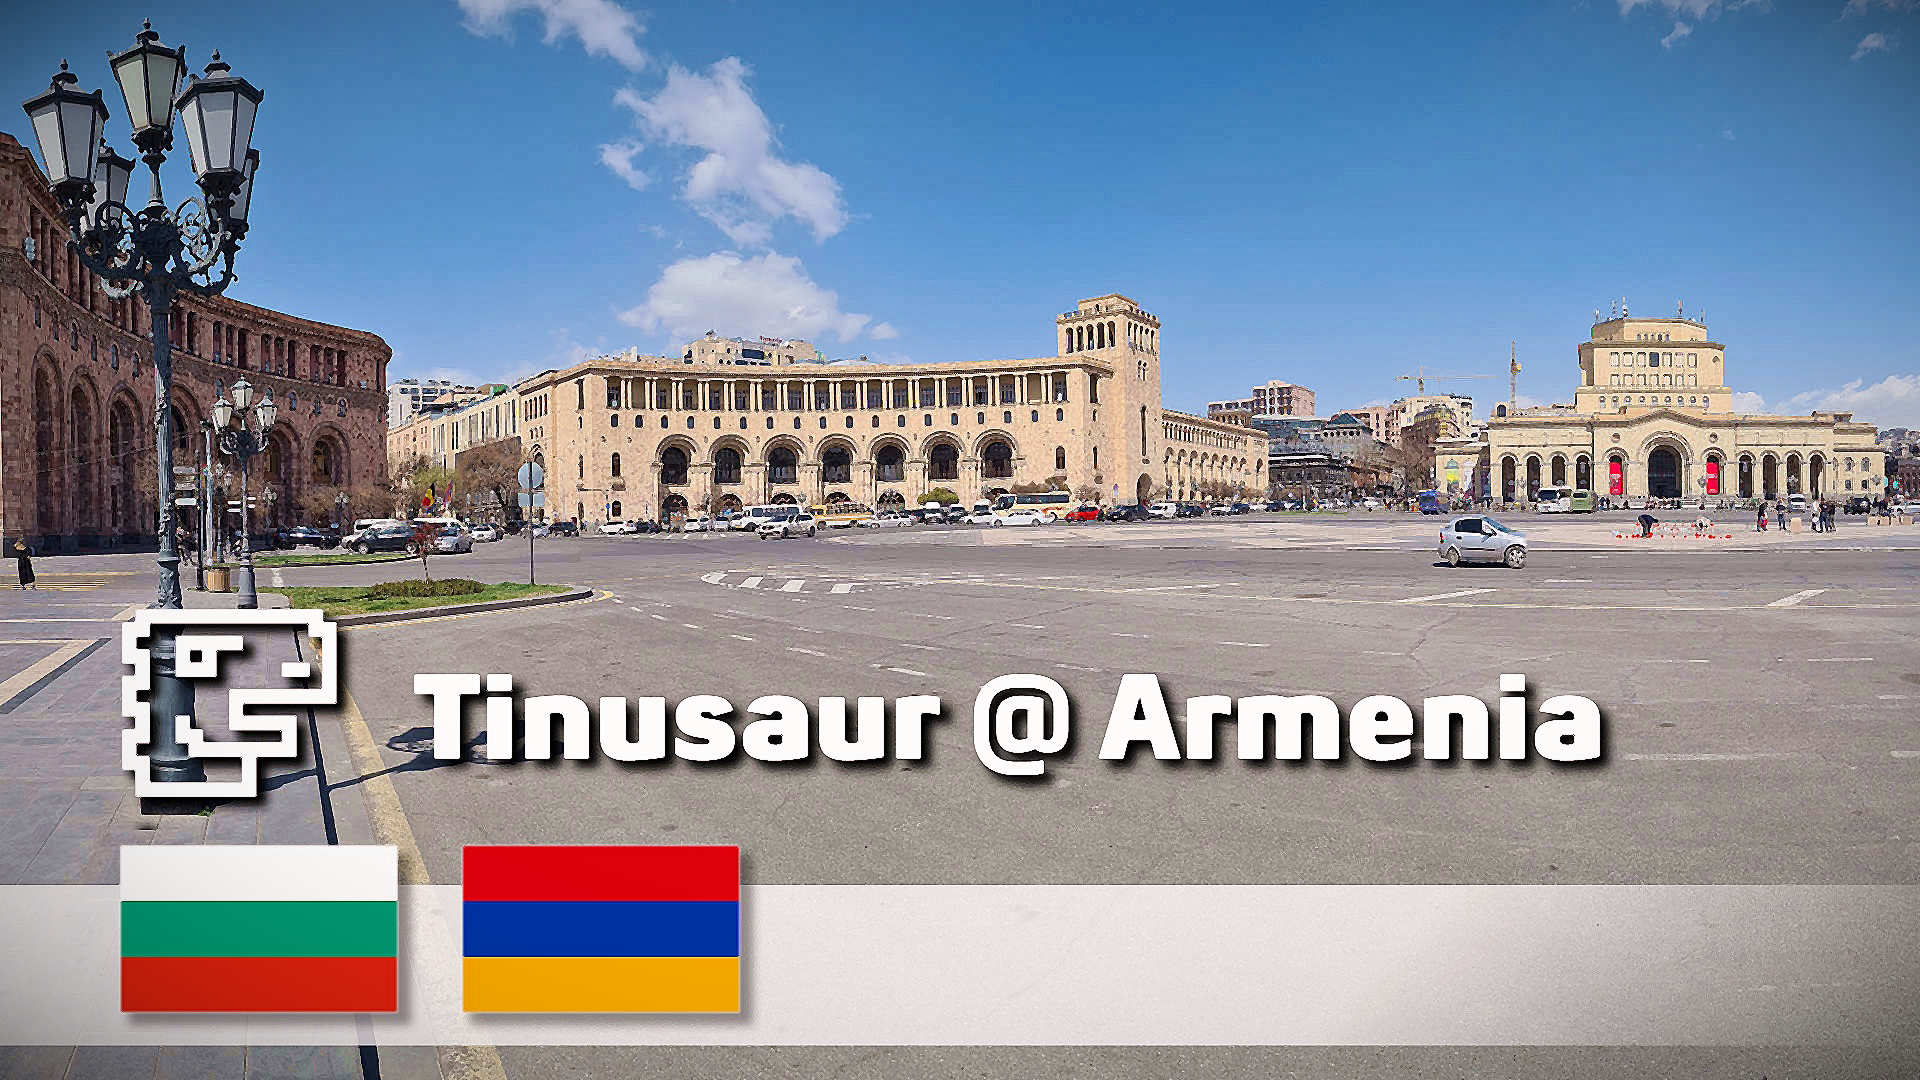 Tinusaur team visited educational organizations and institutions in Yerevan, Armenia